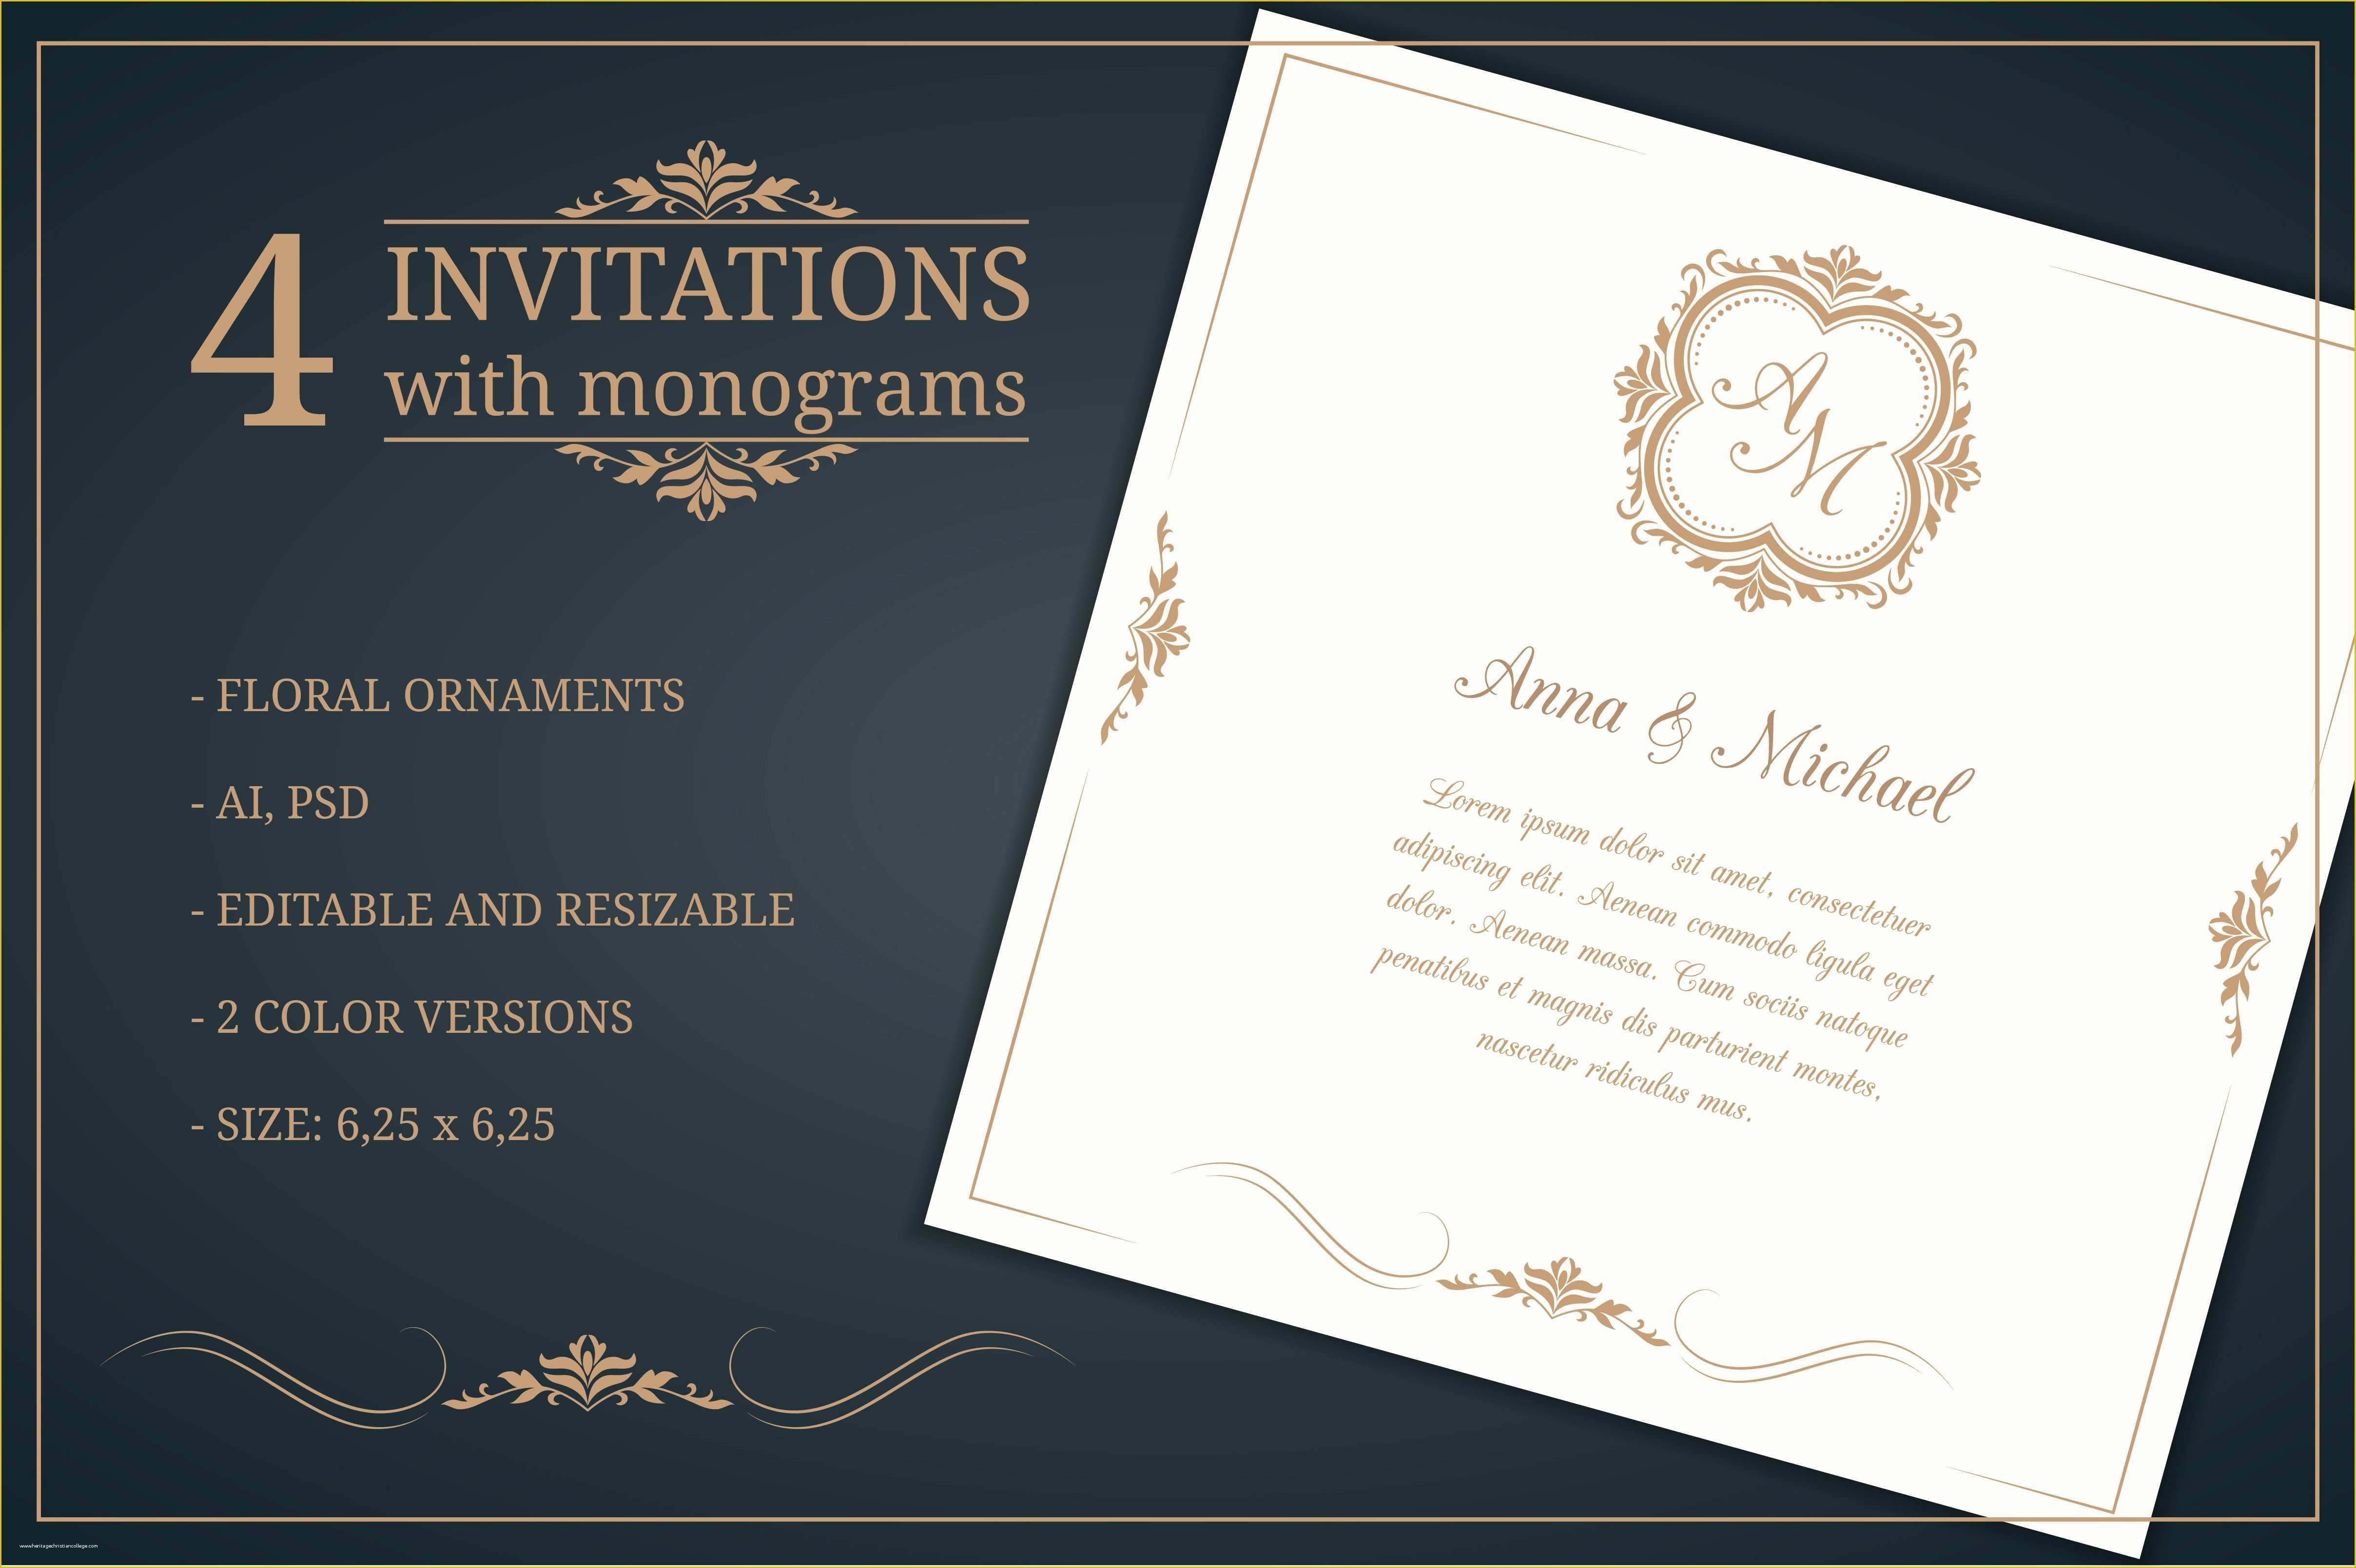 Wedding Invitation Samples Free Templates Of Wedding Invitations with Monograms Wedding Templates